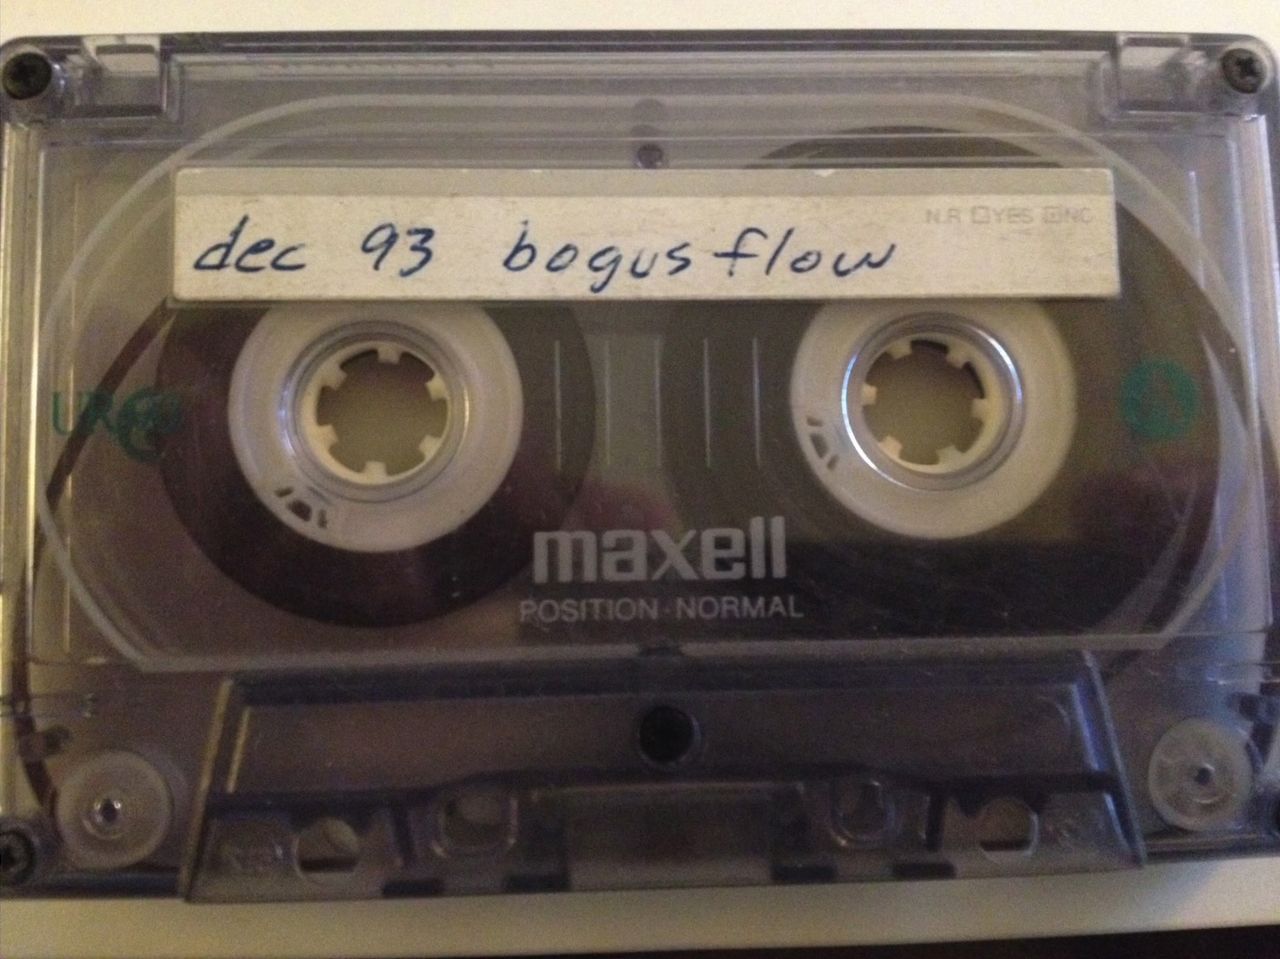 Bogus Flow Cassette album art